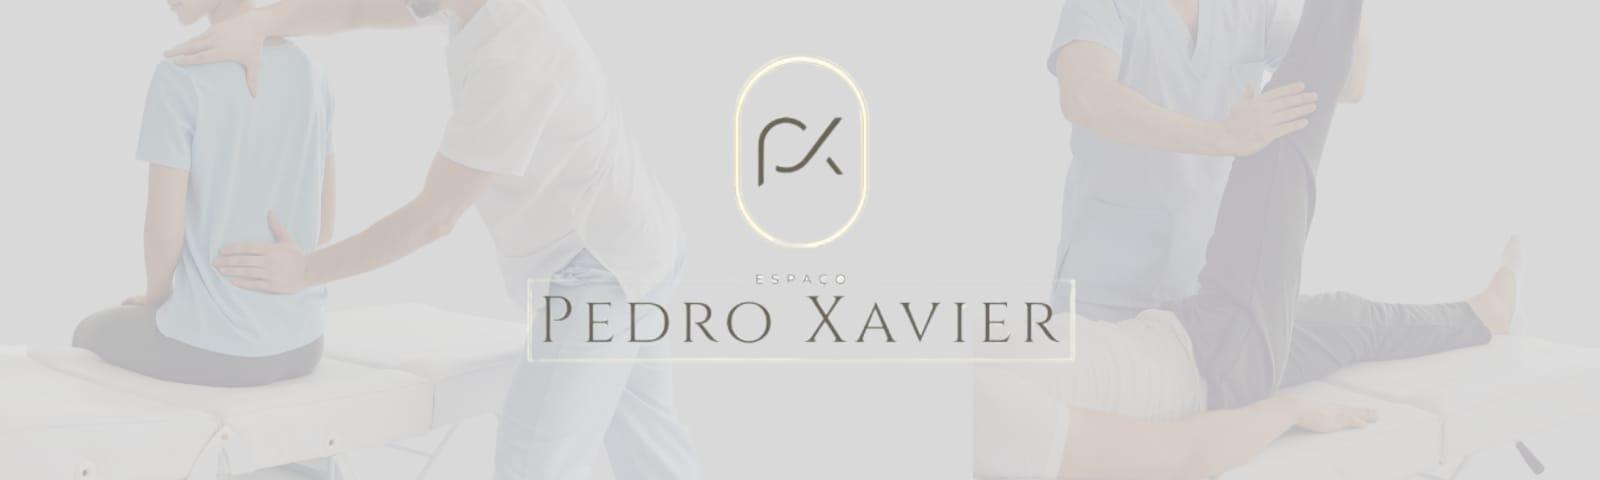 banner da empresa Espaço Pedro Xavier